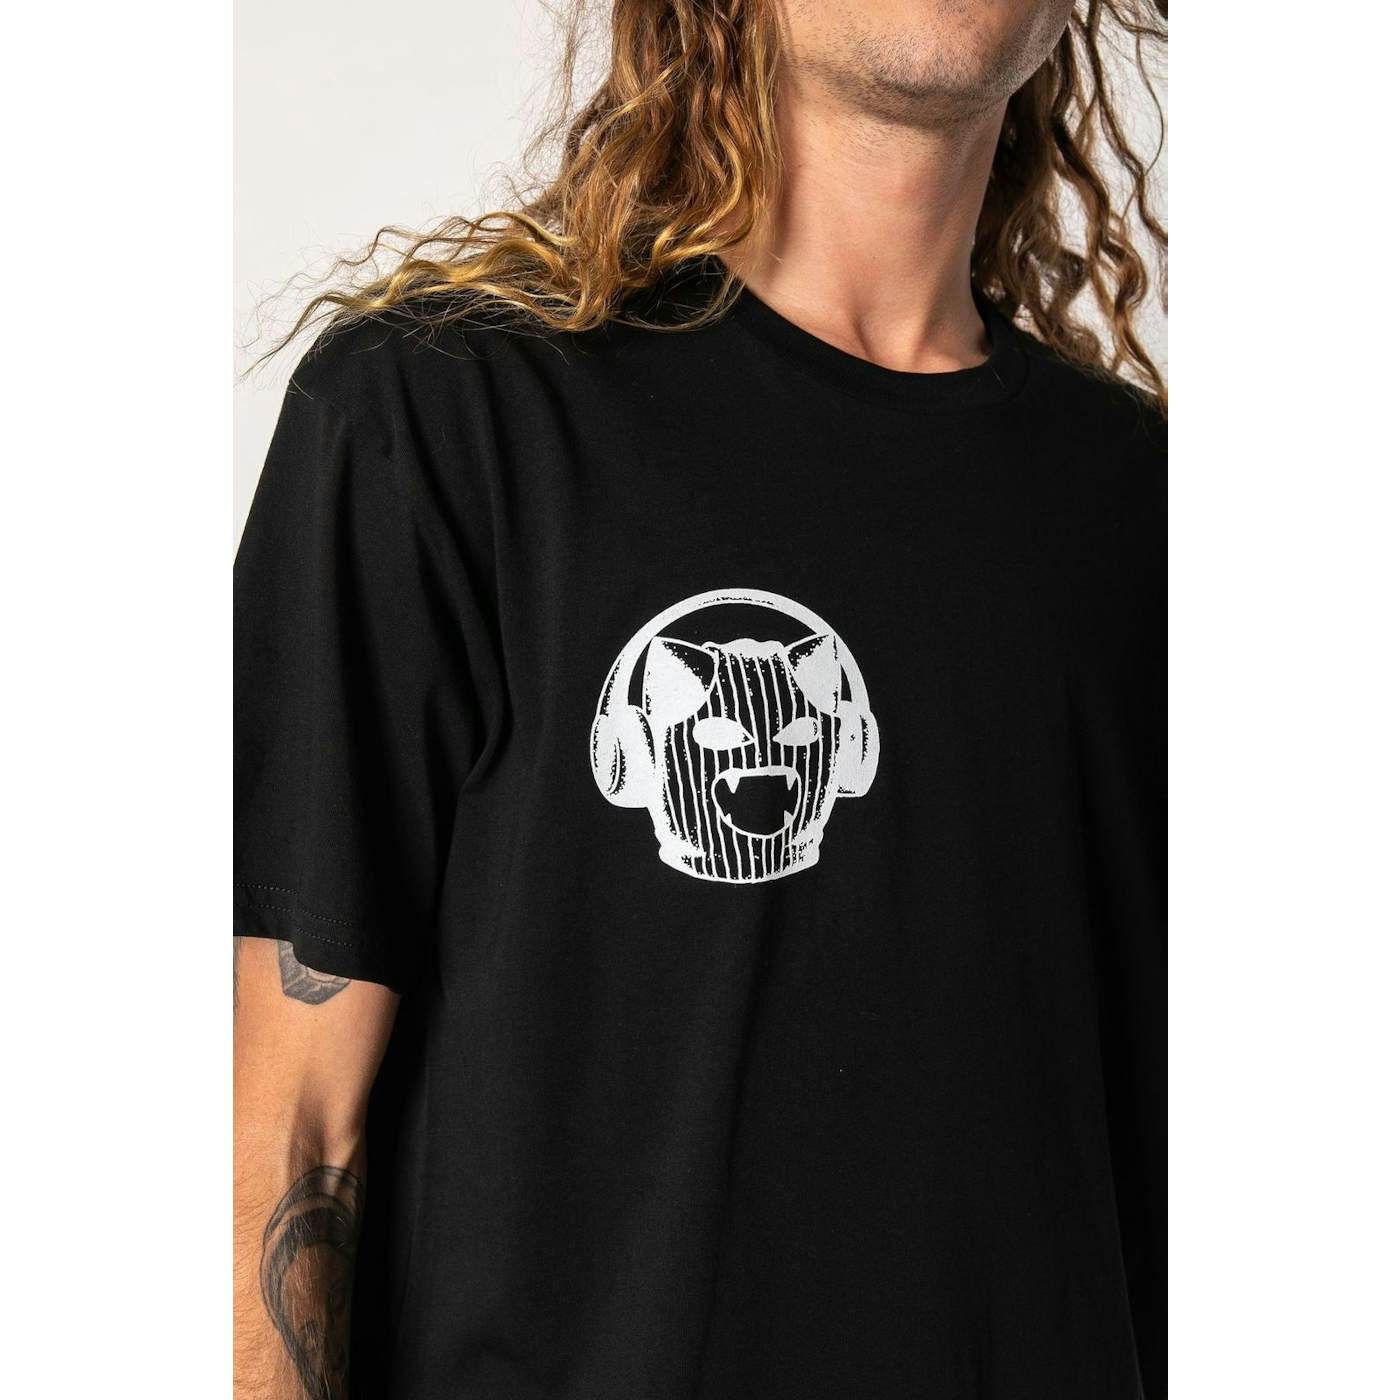 Monstercat SABOTAGE - Black T-Shirt